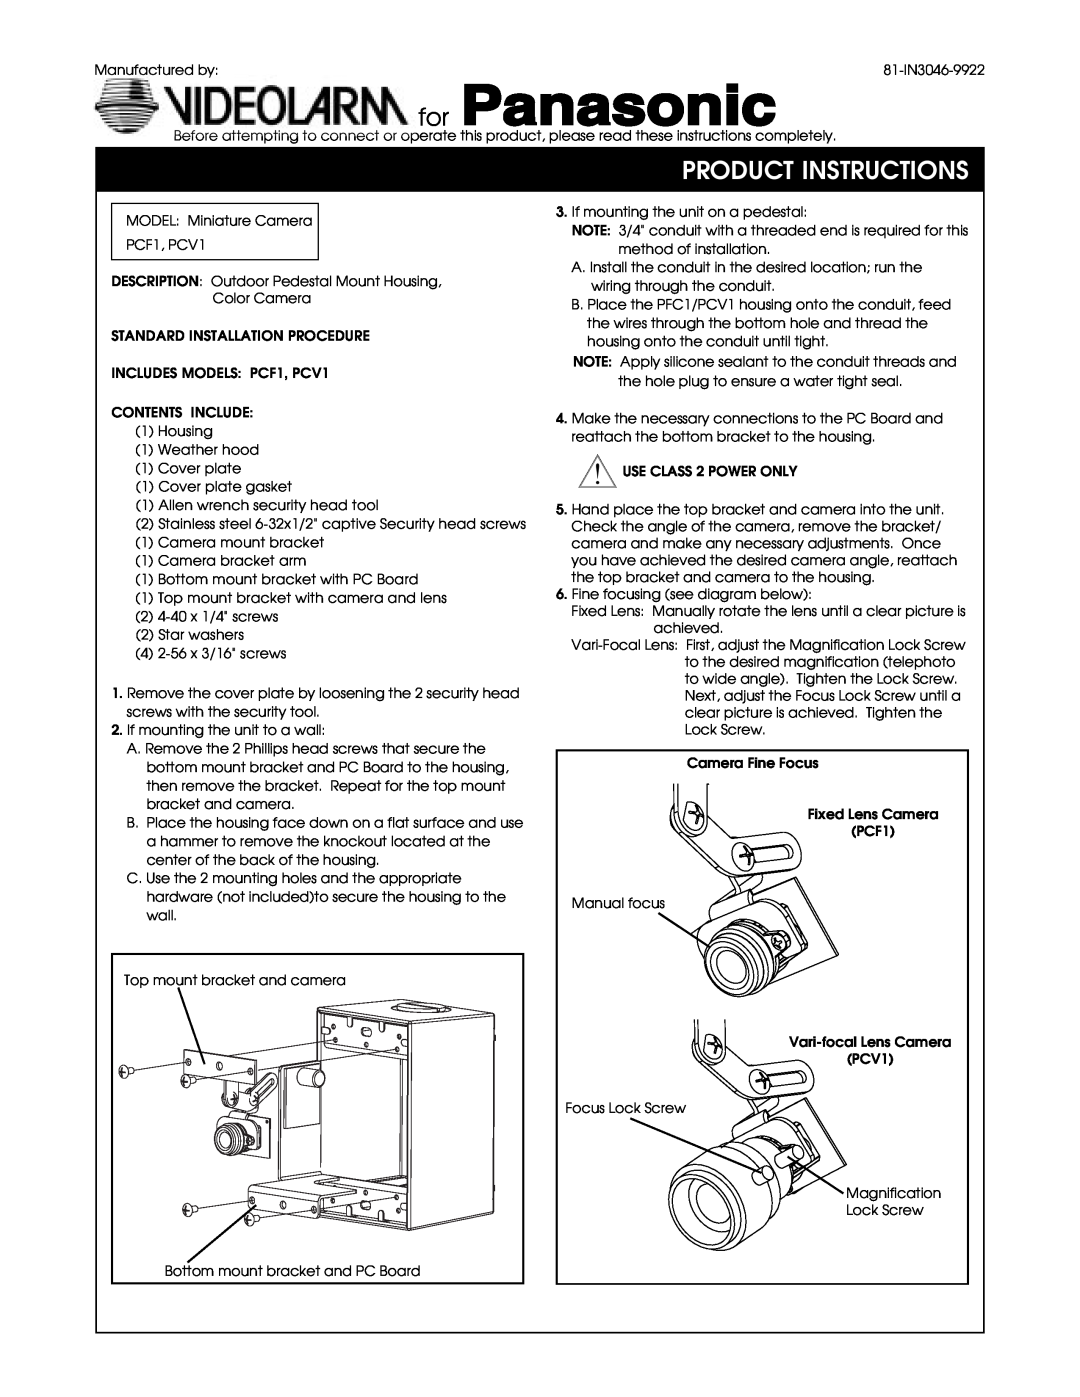 Panasonic PCF1, PCV1 manual Product Instructions 